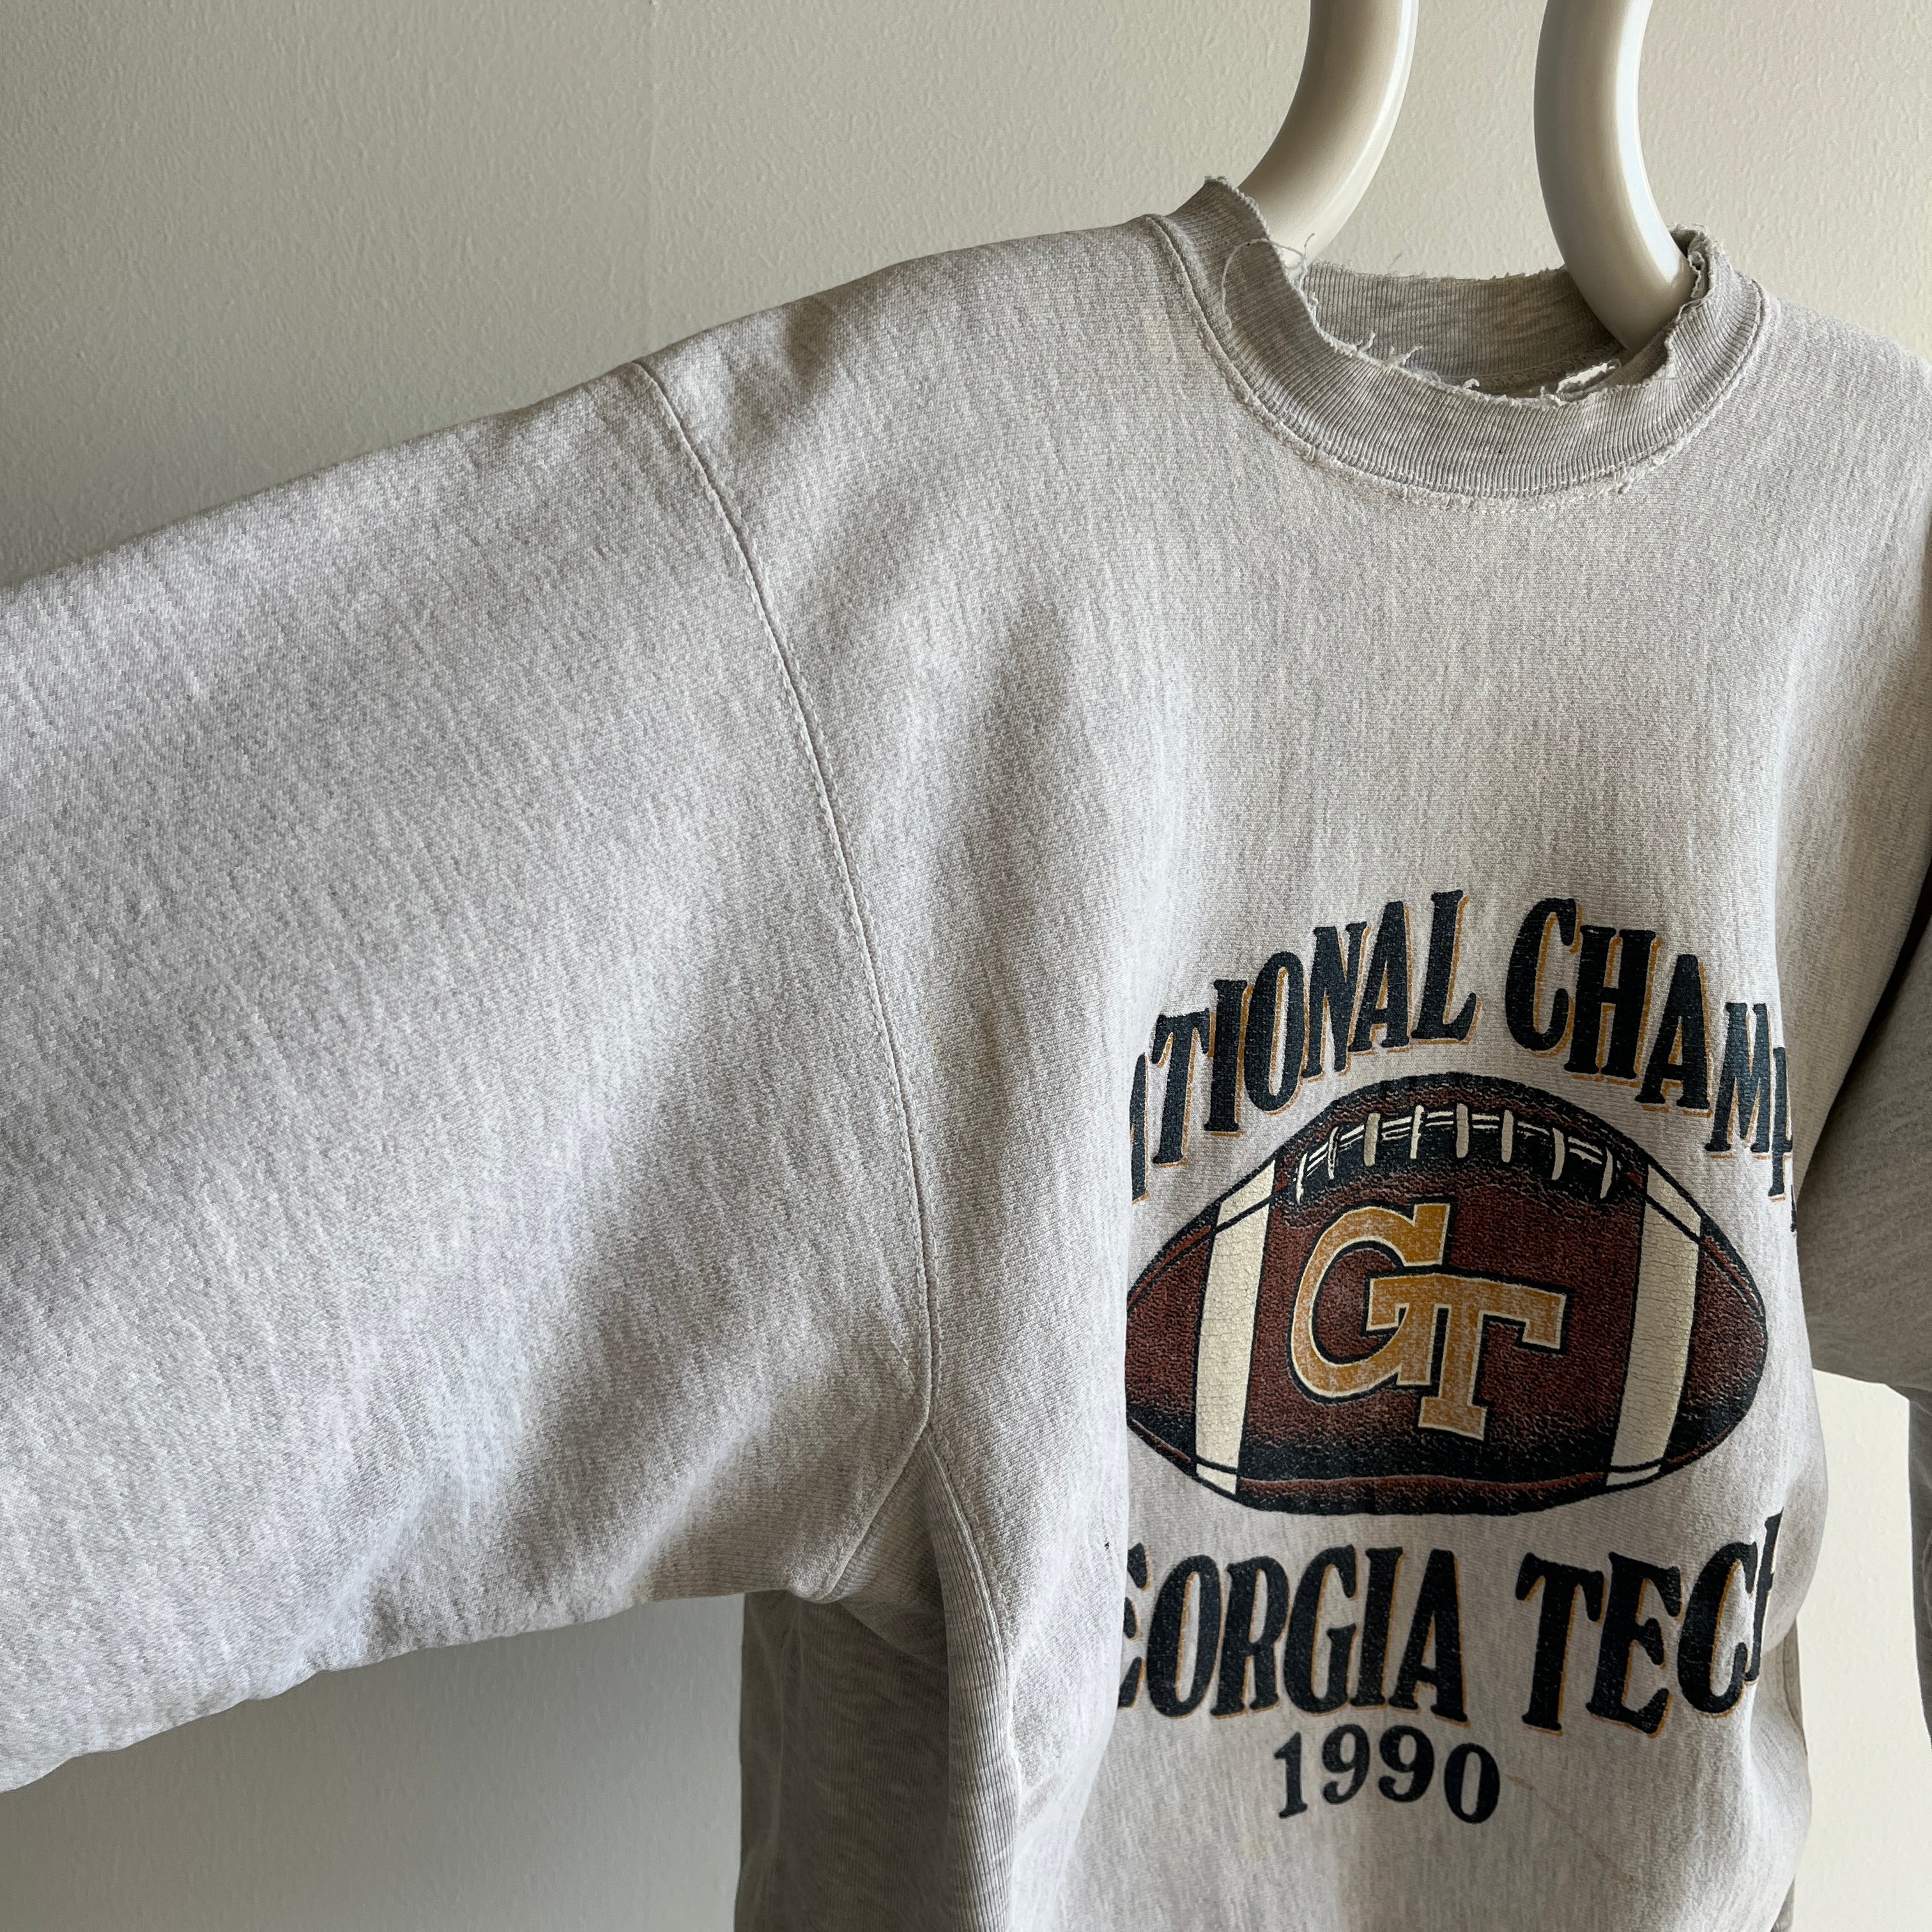 1990 Georgia Tech National Champs Reverse Weave Heavy Weight Sweatshirt